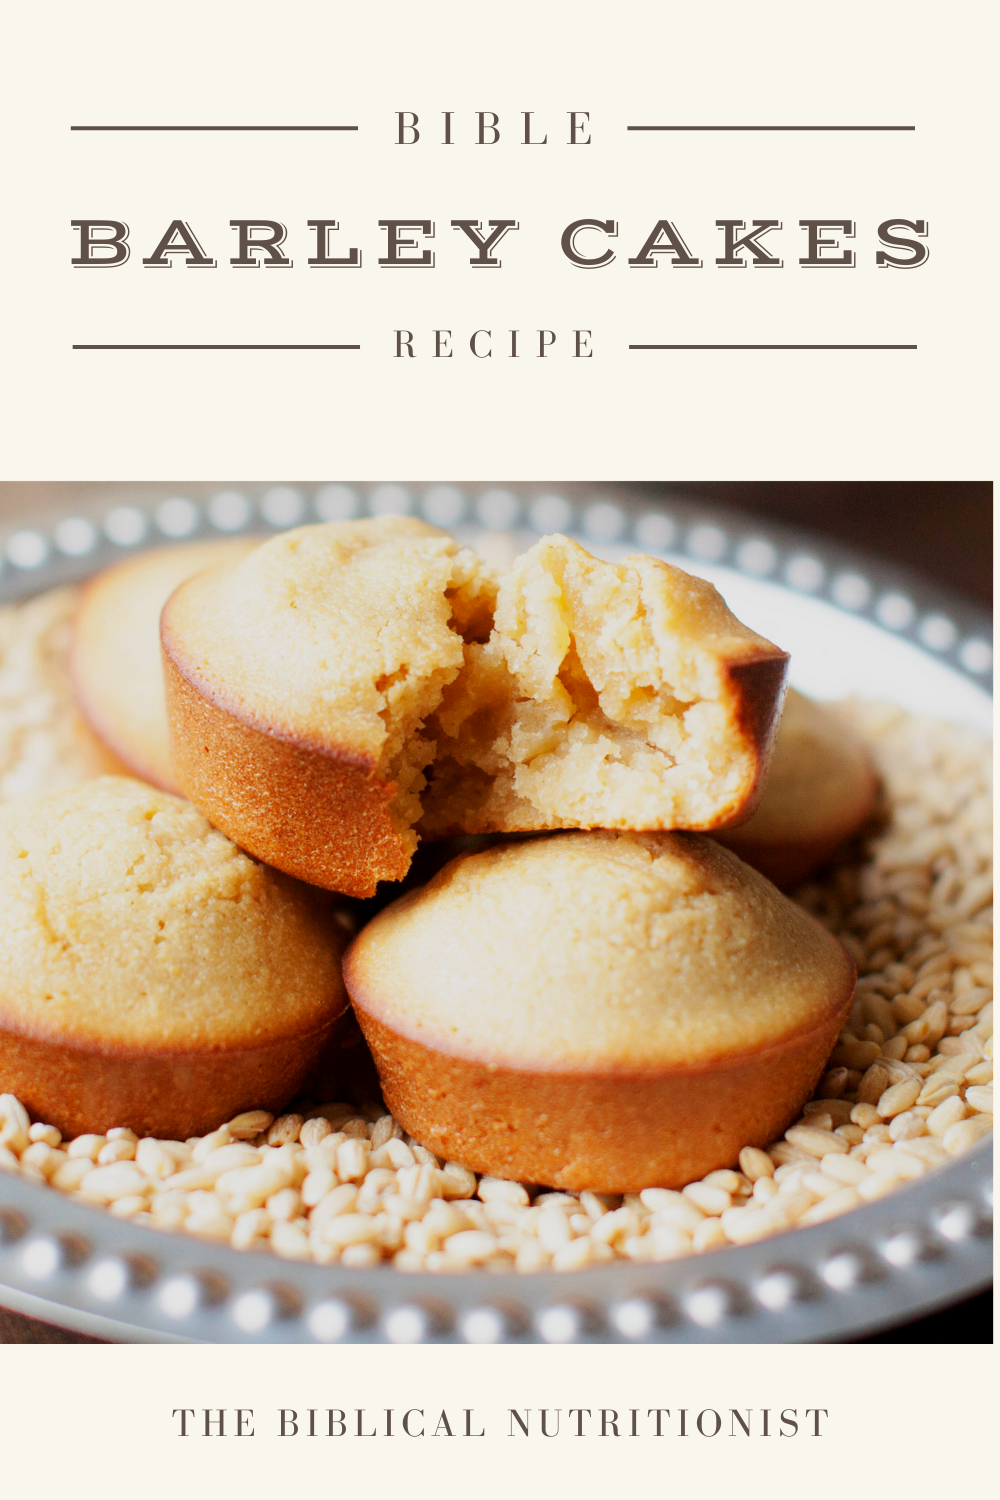 Bible Barley Cakes Recipe